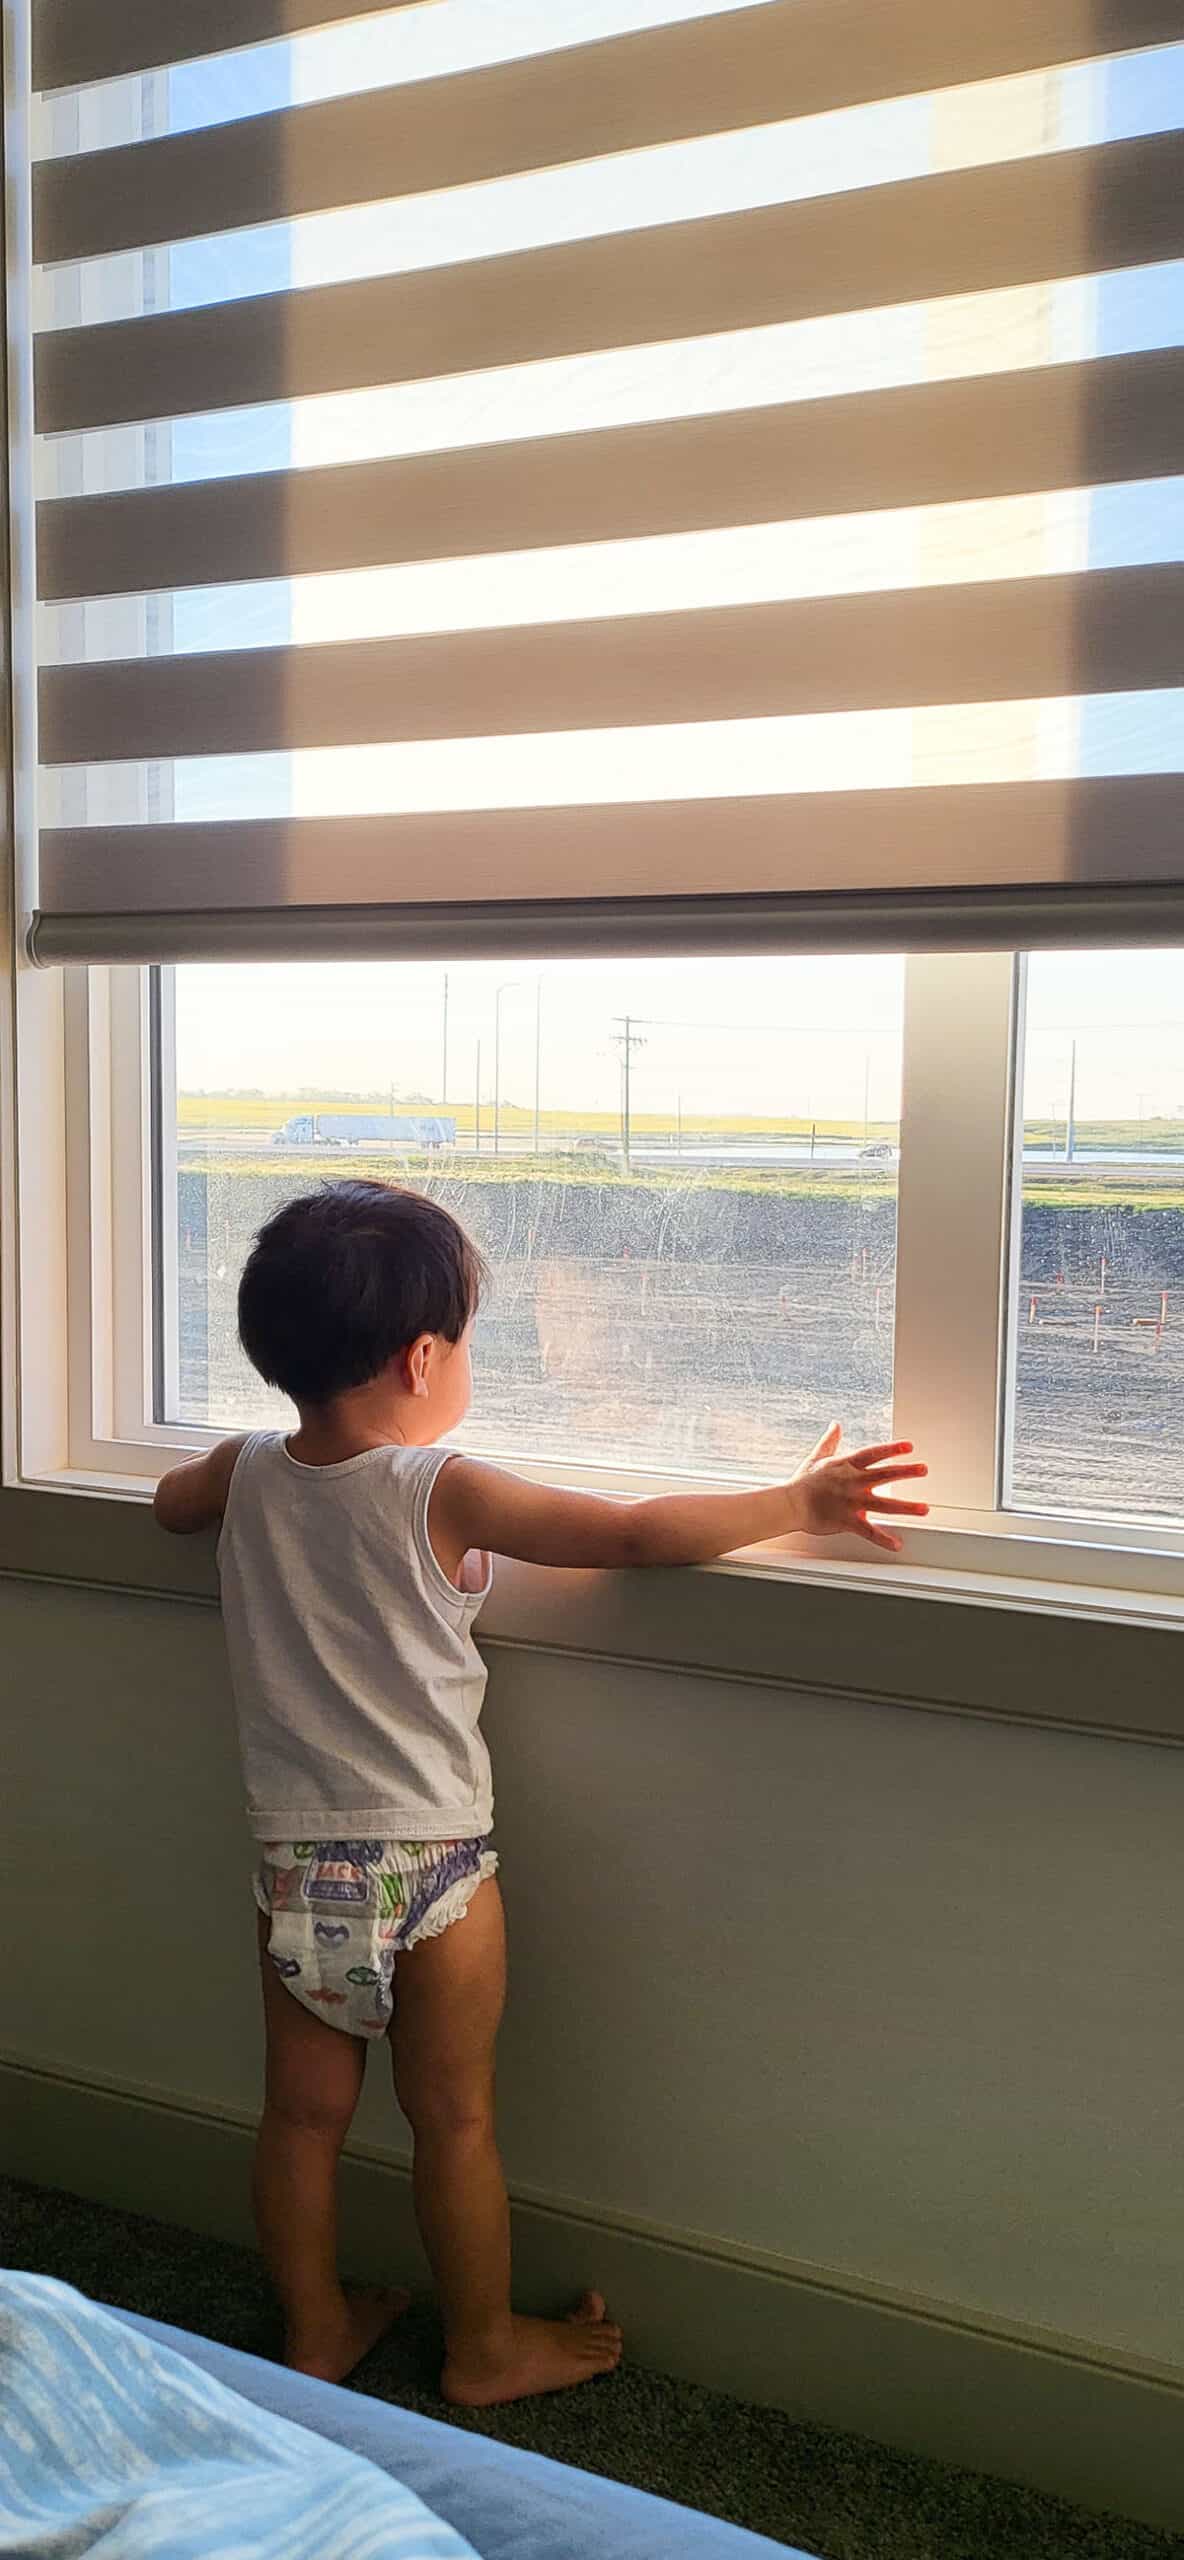 Little boy looking through a window.